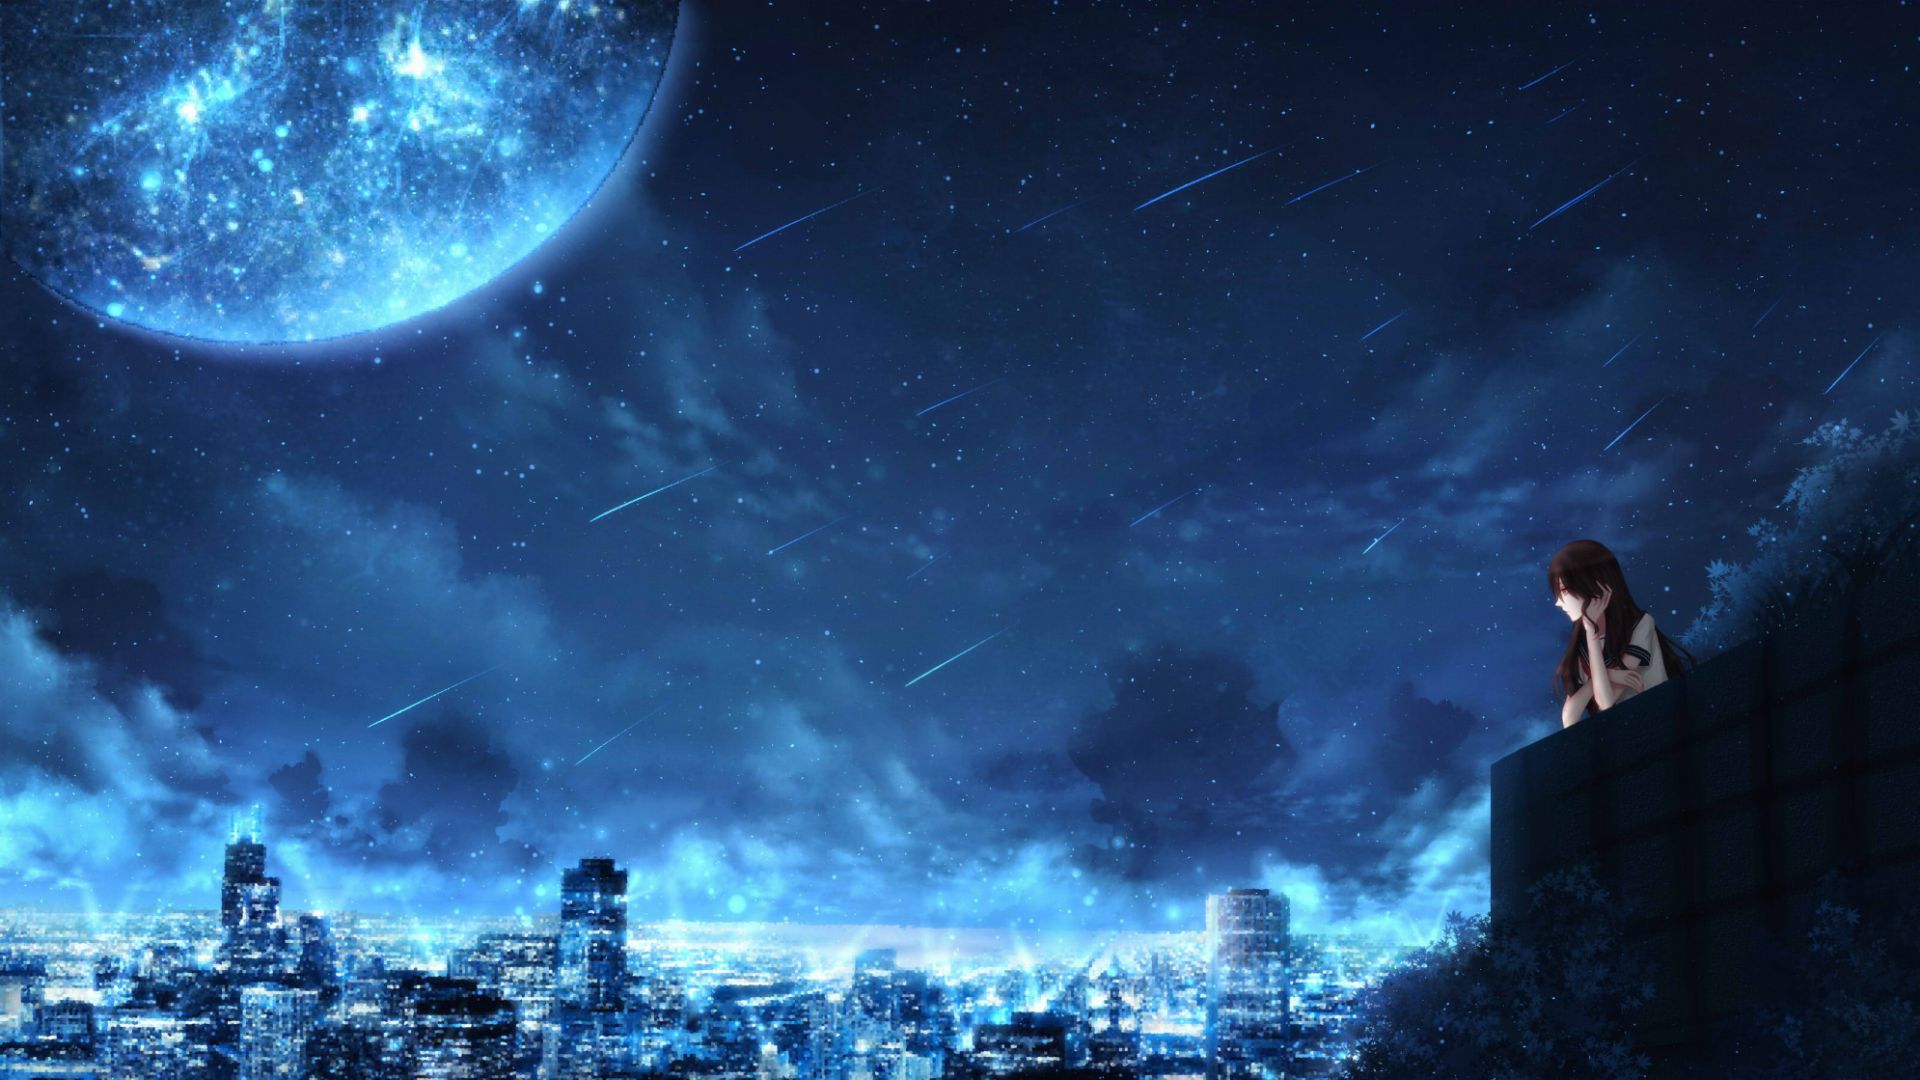 Anime City Night Enjoying the last moment  Фоновые рисунки Аниме пейзажи  Пейзажи